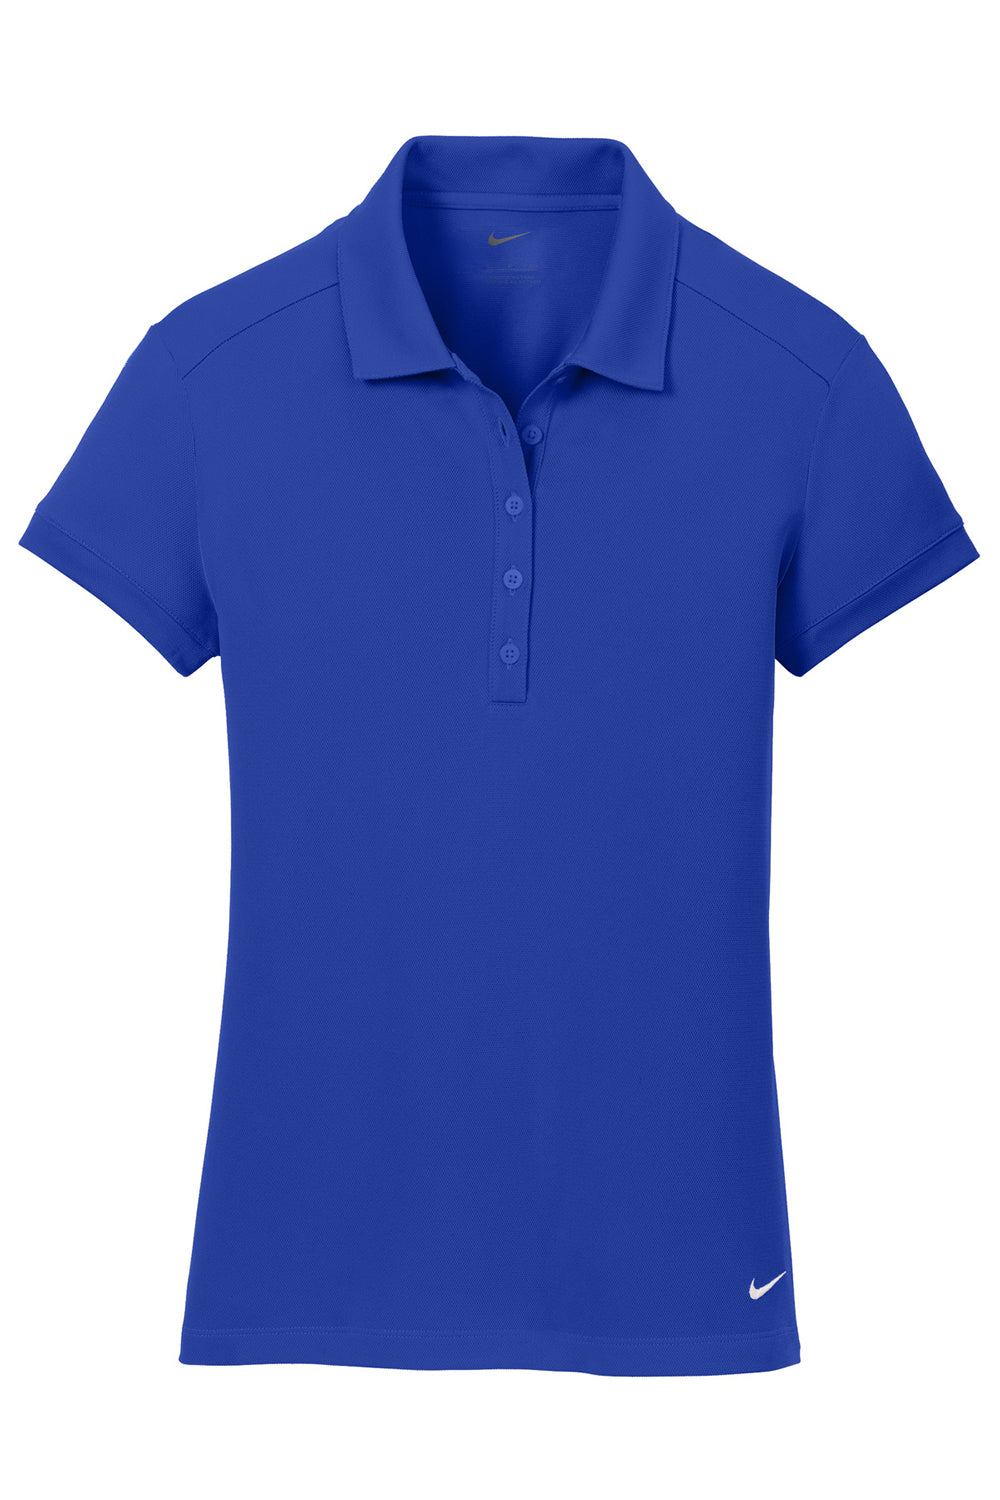 Nike 746100 Womens Icon Dri-Fit Moisture Wicking Short Sleeve Polo Shirt Royal Blue Flat Front